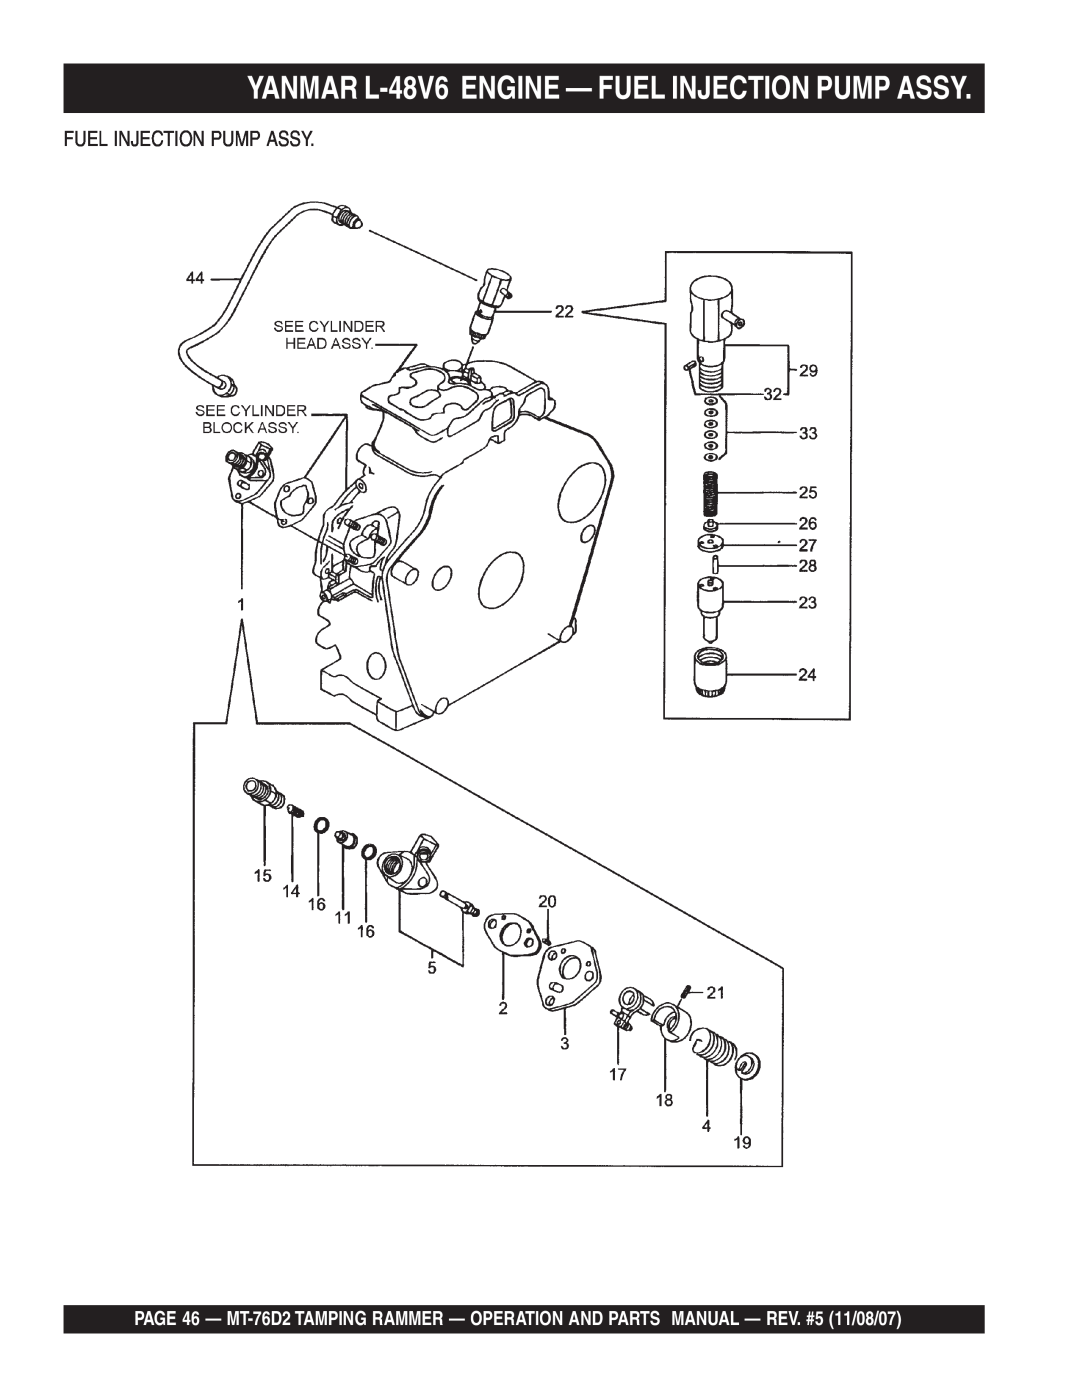 Multiquip MT-76D2 manual YANMAR L-48V6 ENGINE - FUEL INJECTION PUMP ASSY, Fuel Injection Pump Assy 